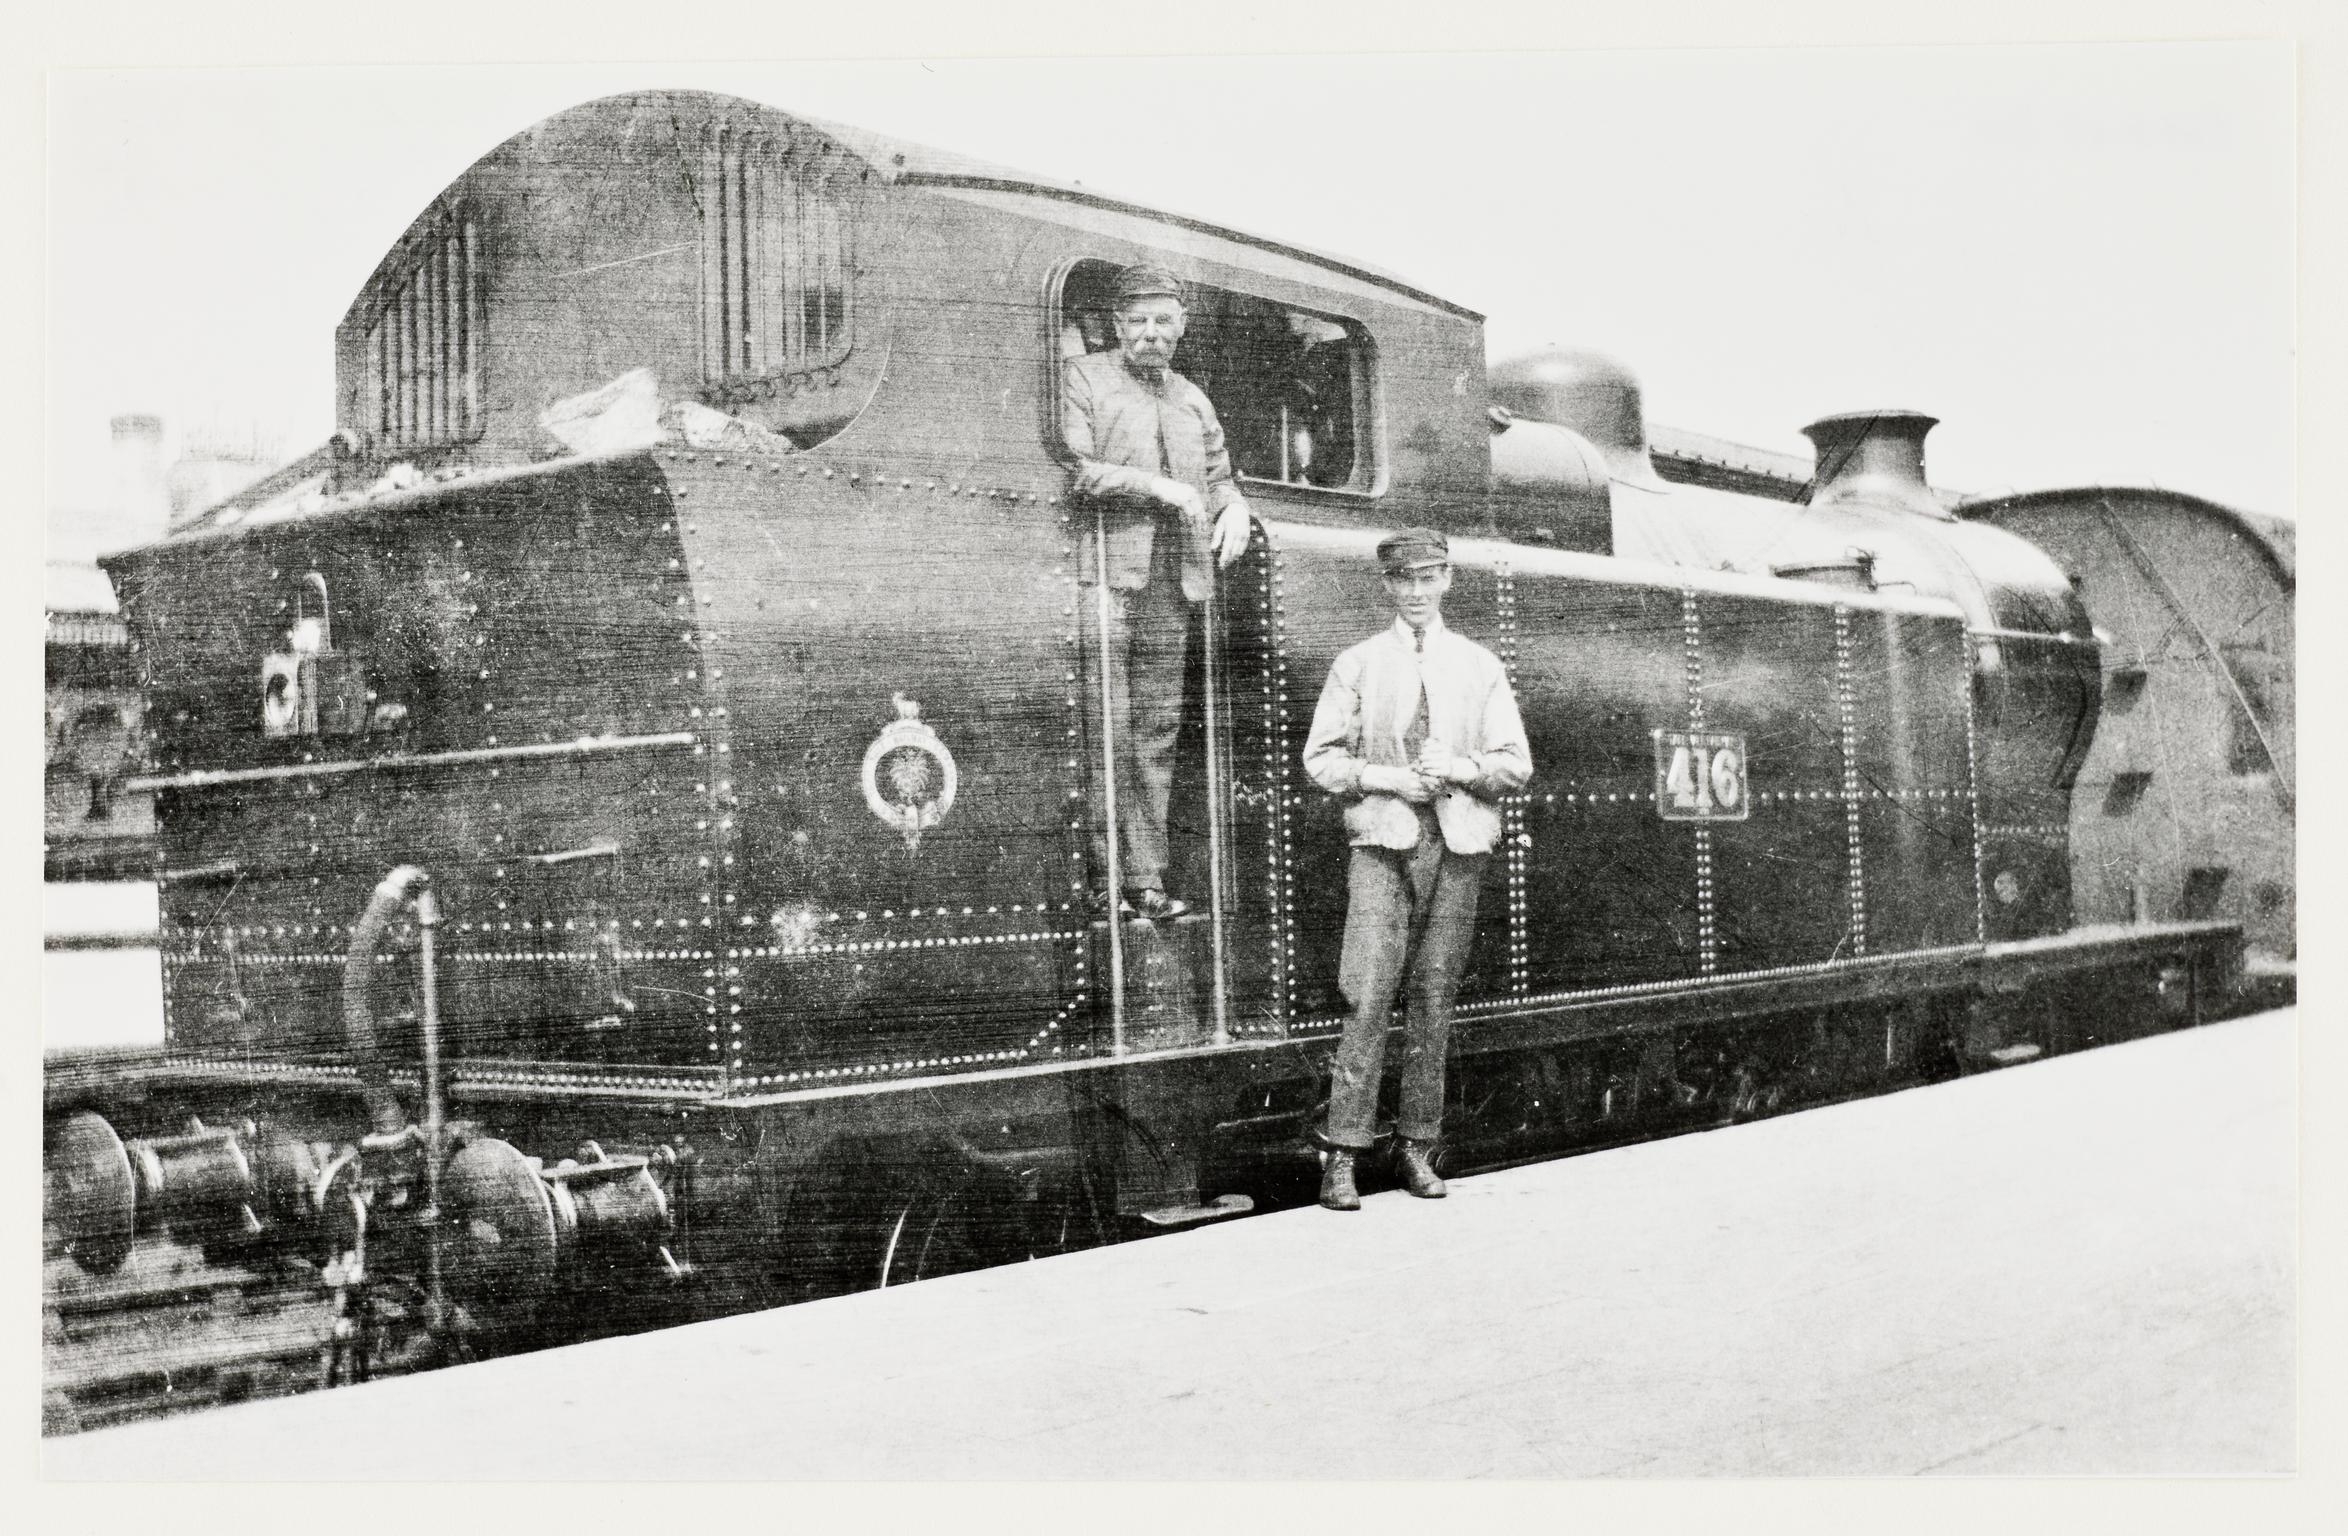 Taff Vale Railway locomotive, photograph